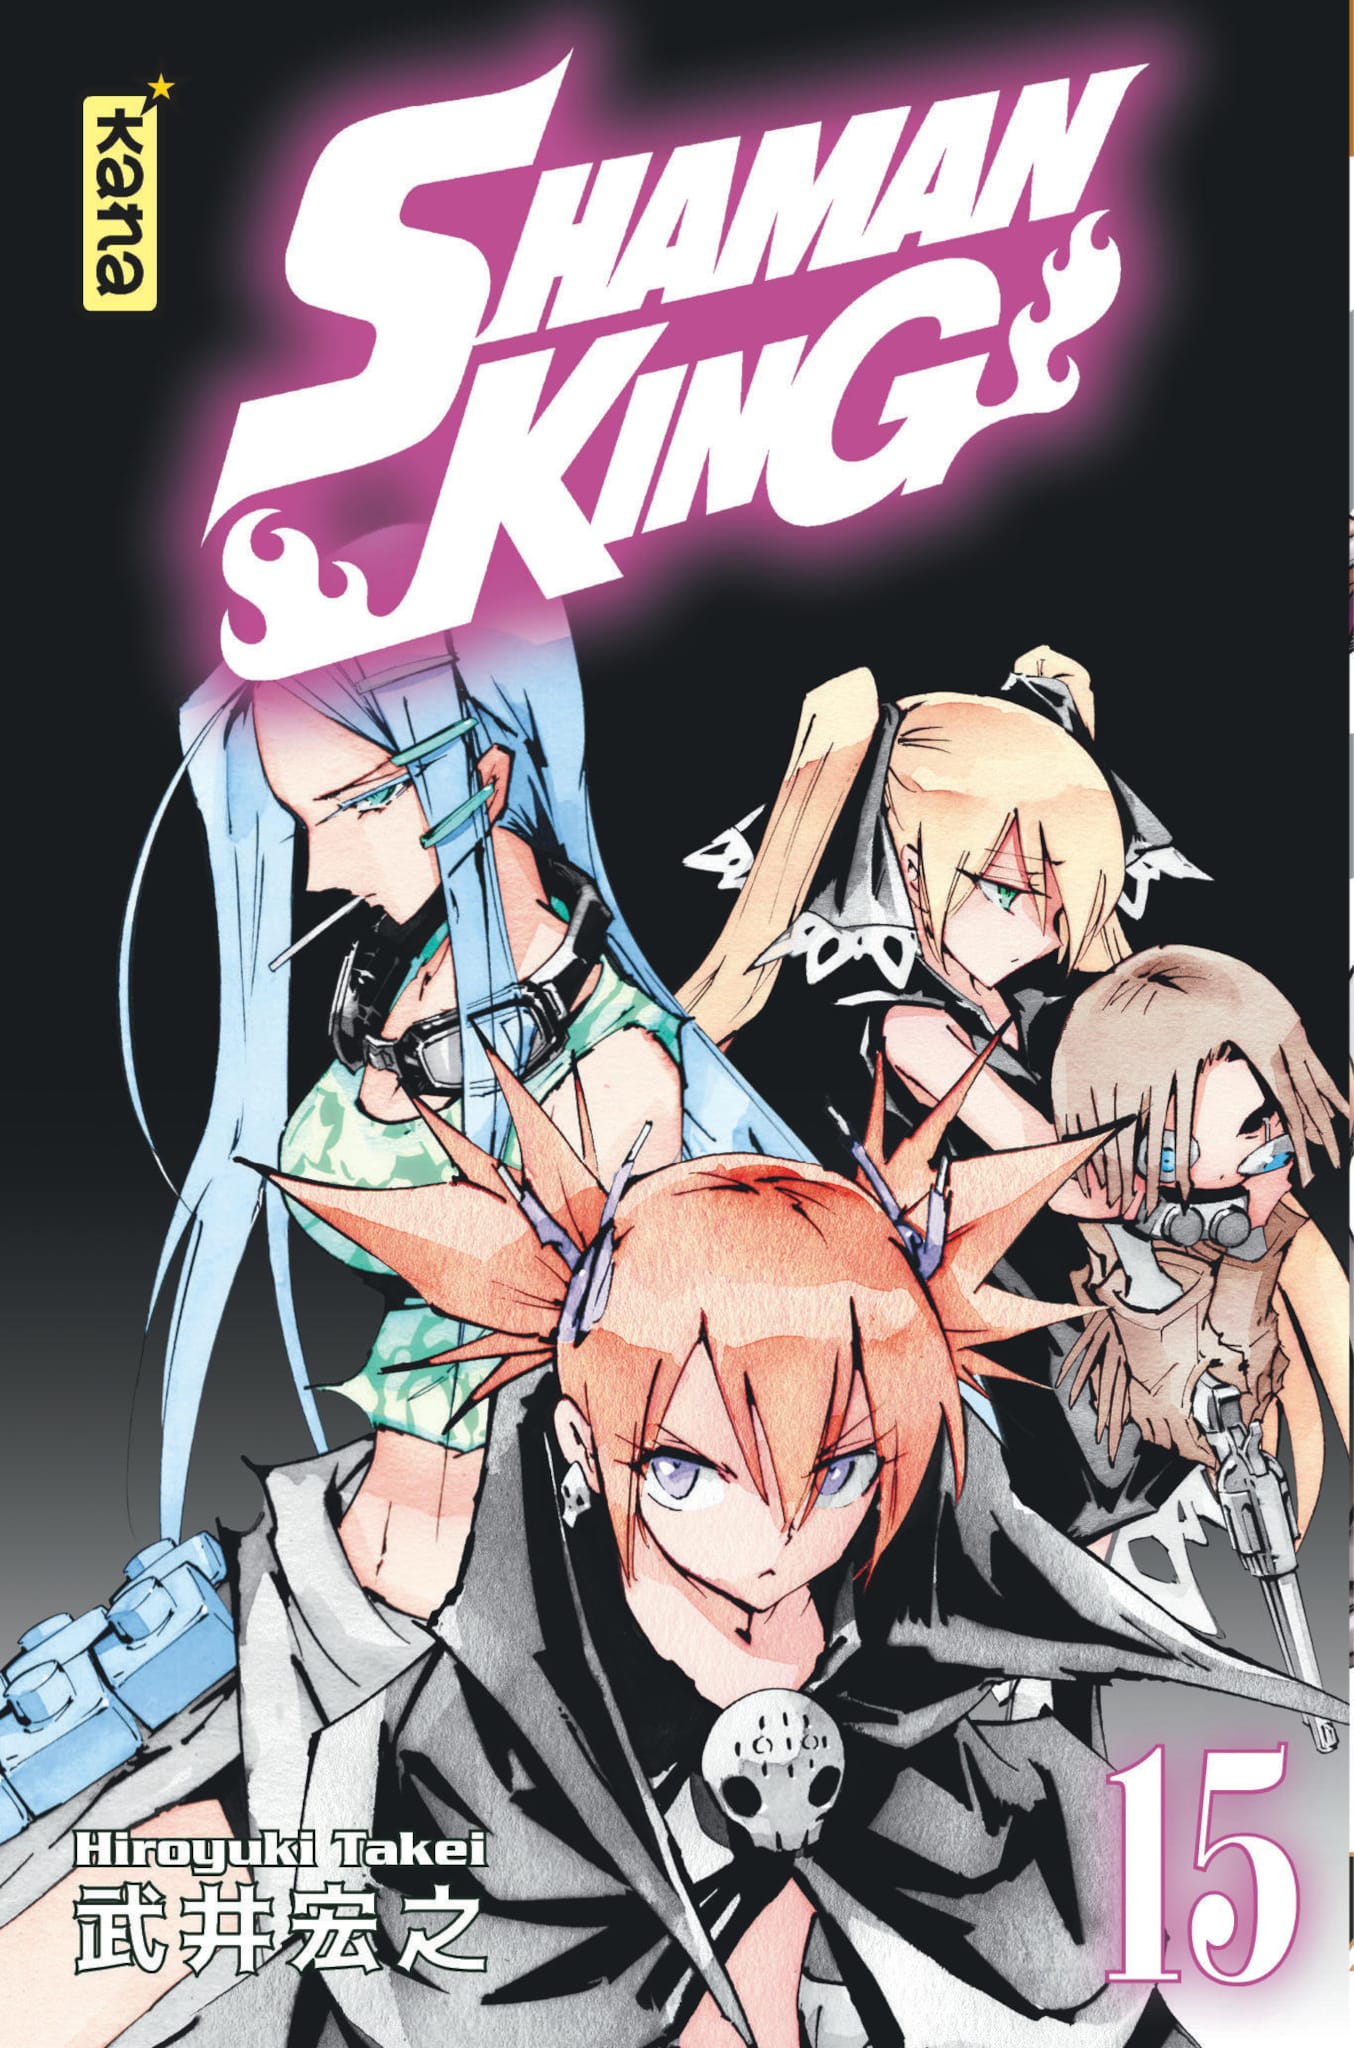 Tome 15 du manga Shaman King